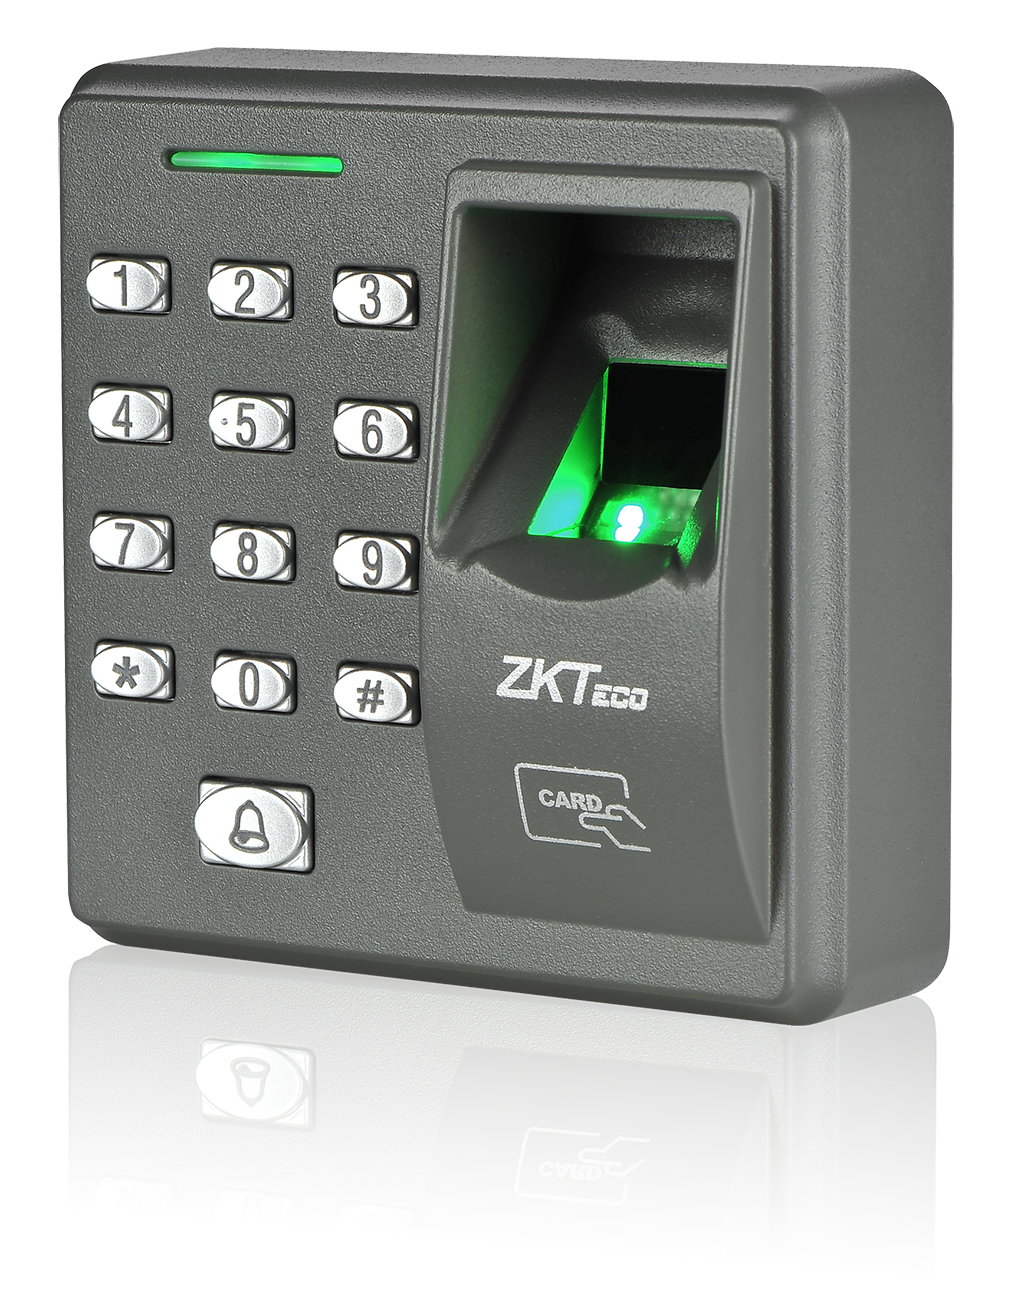 kisspng-access-control-fingerprint-biometrics-zkteco-secur-scanner-5ad1a23bcf5884.9459192315236879958493